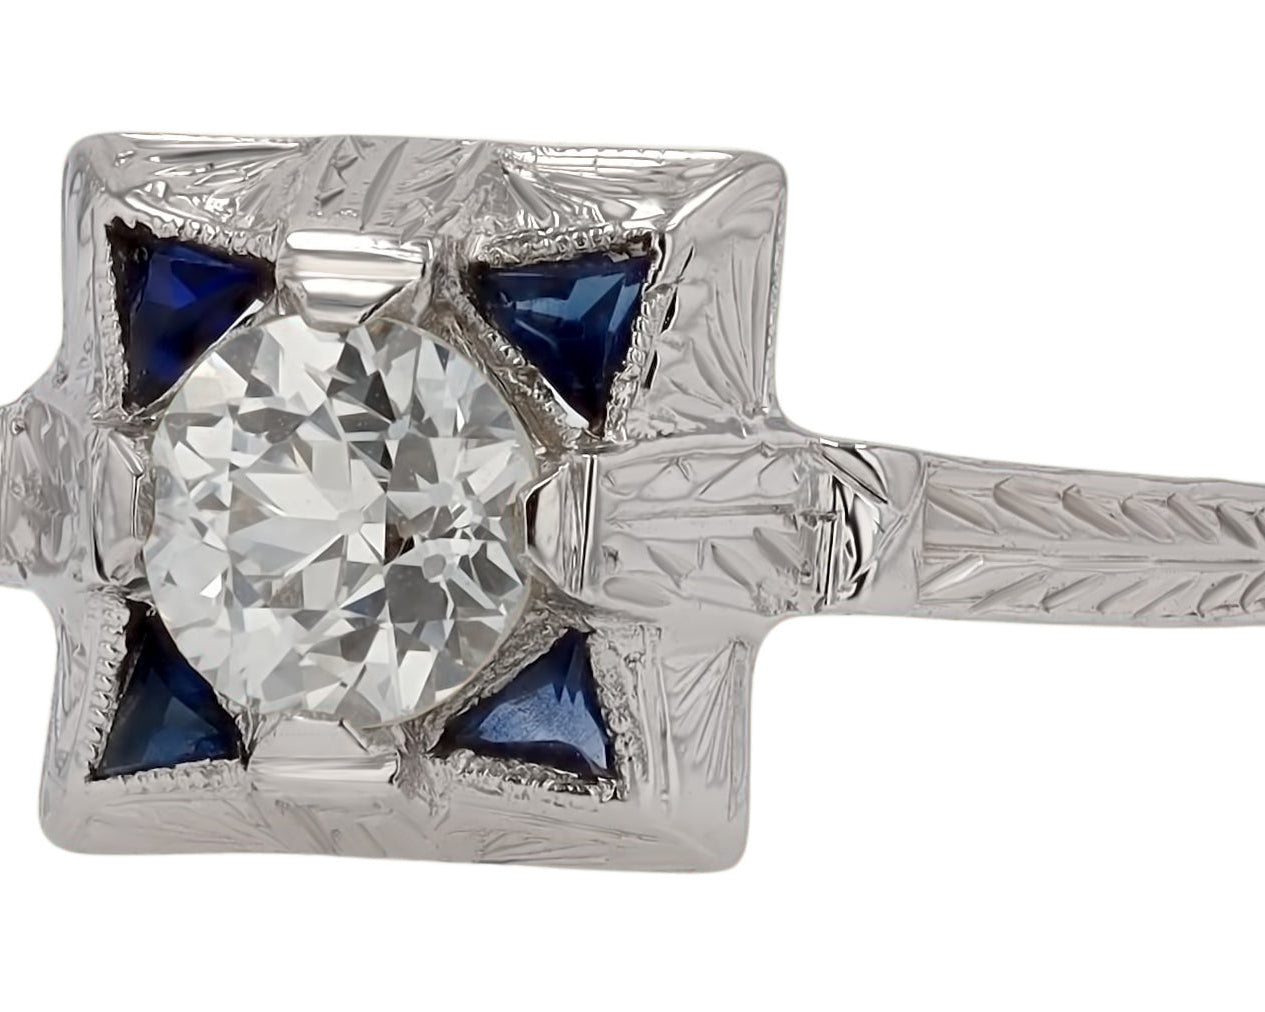 0.65ct Old European Cut Diamond Art Deco Engagement Ring